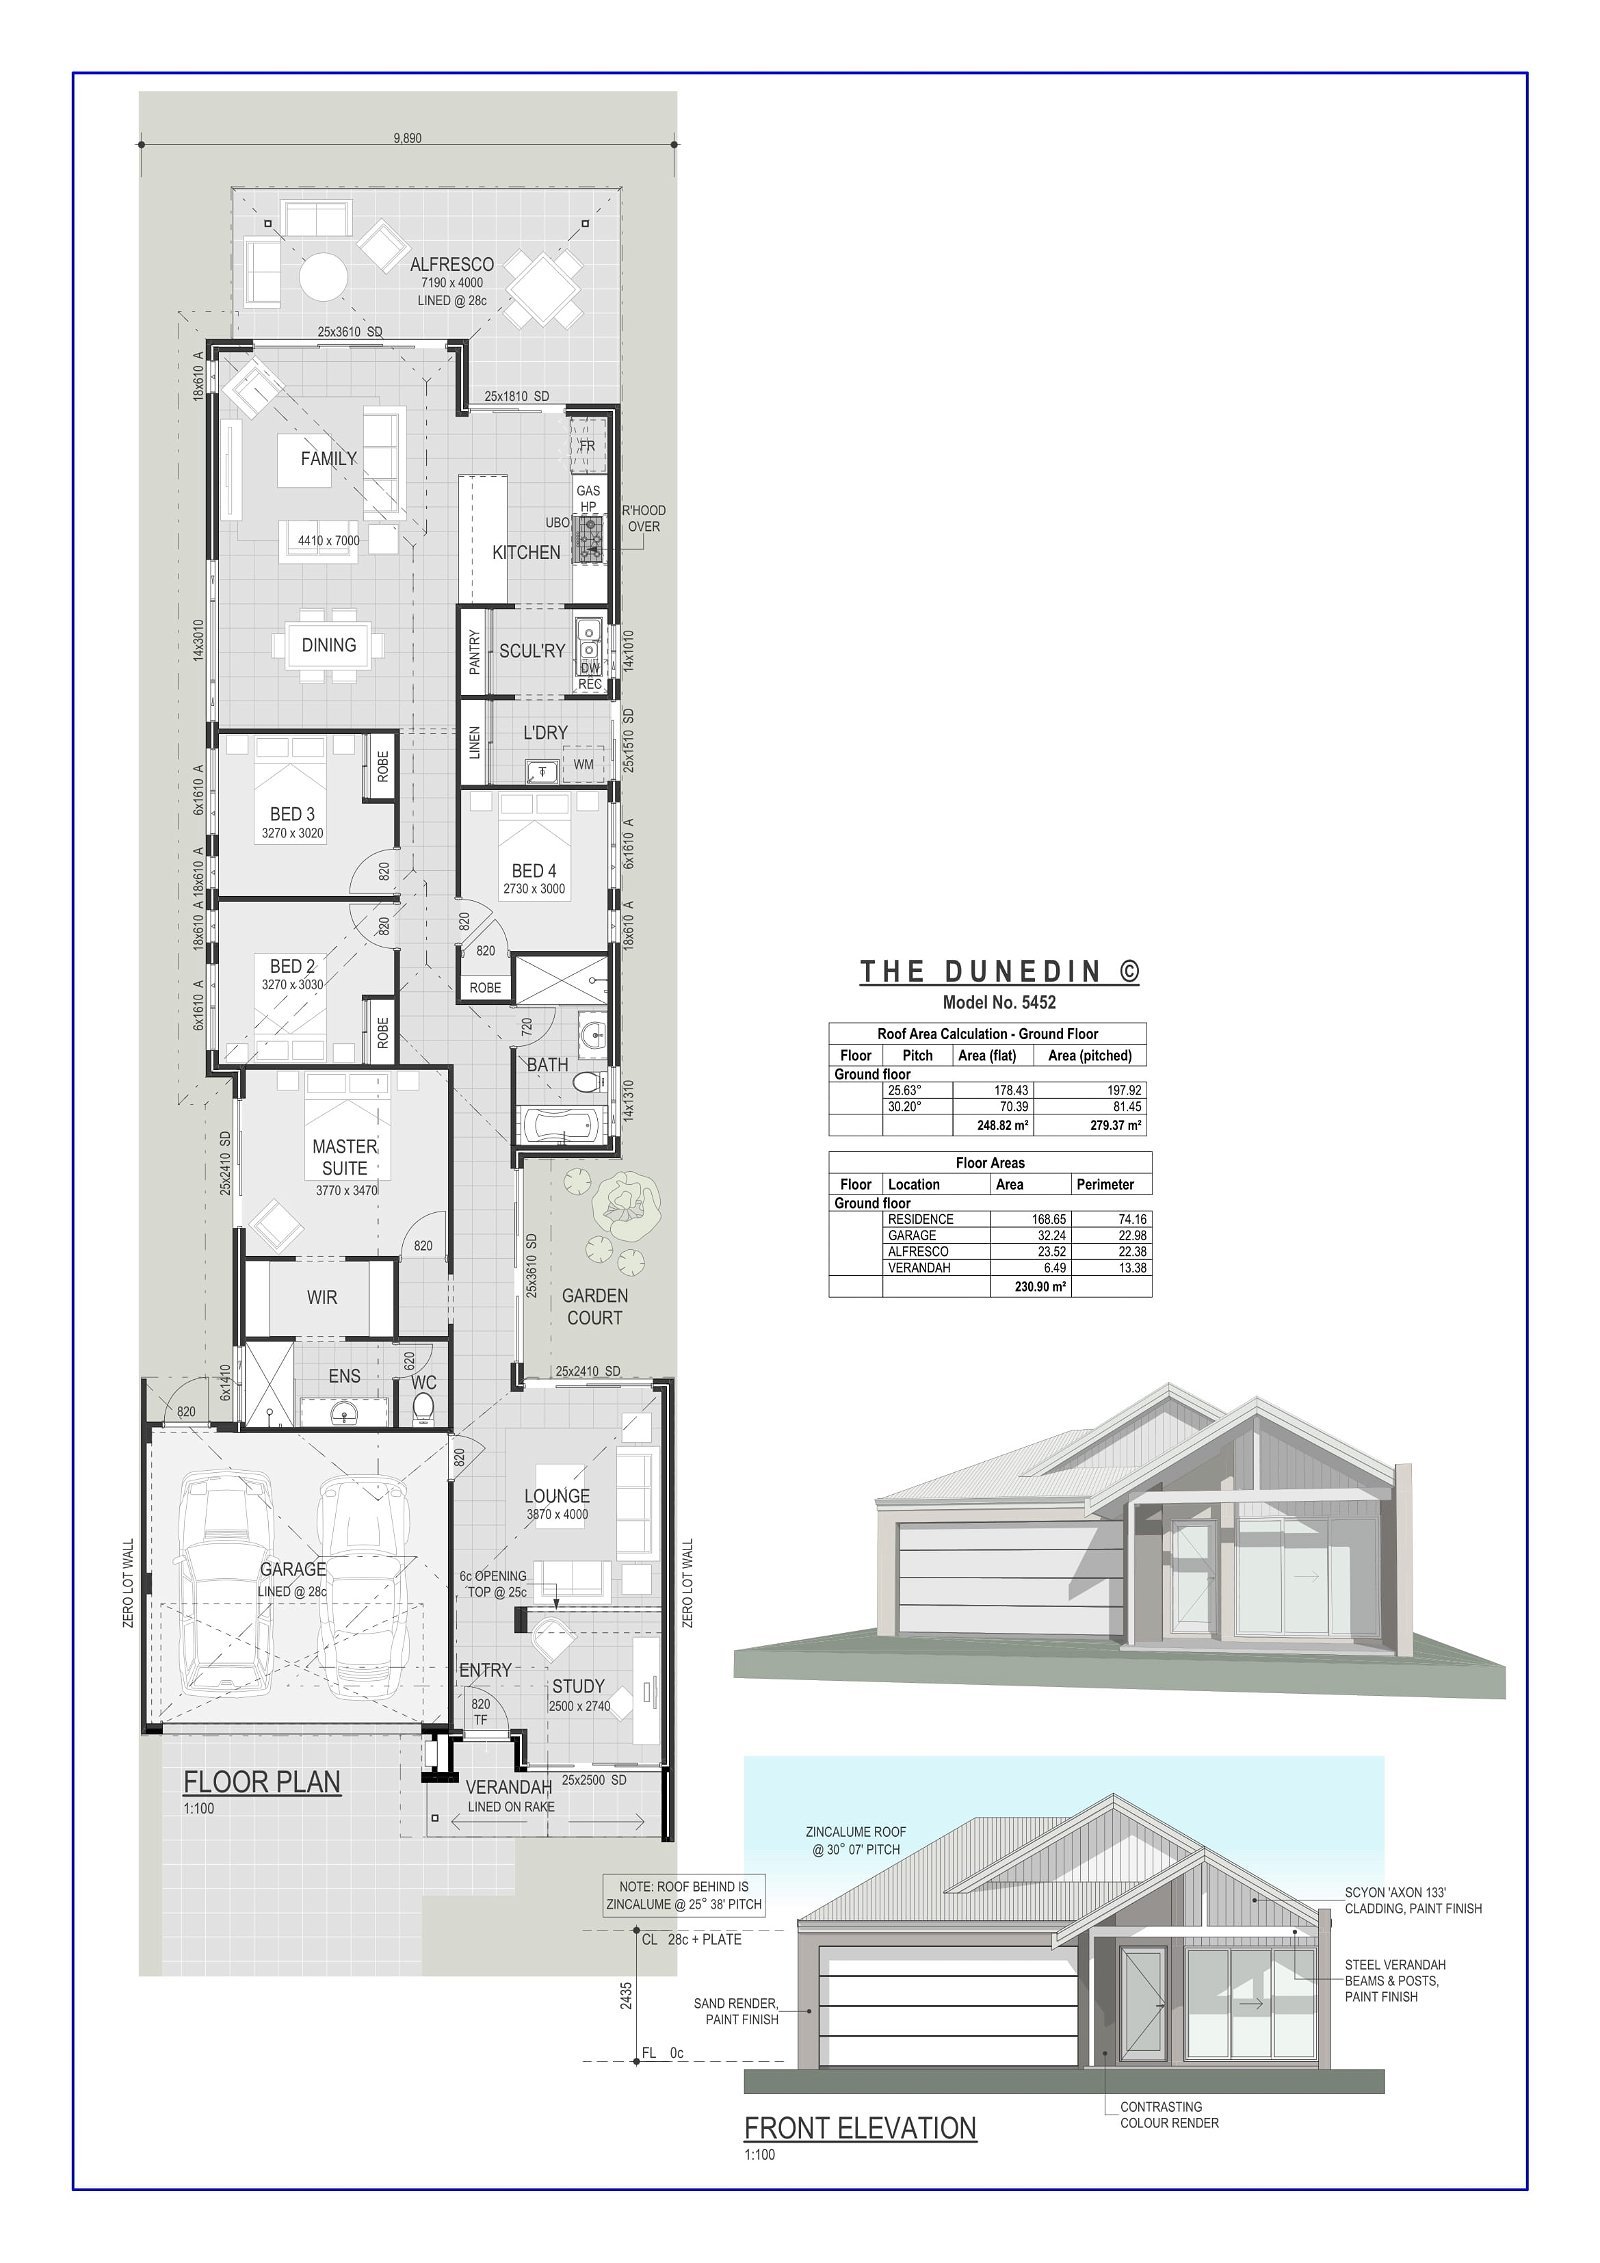 Residential Building Wa -  - Floorplan - The Dunedin 1